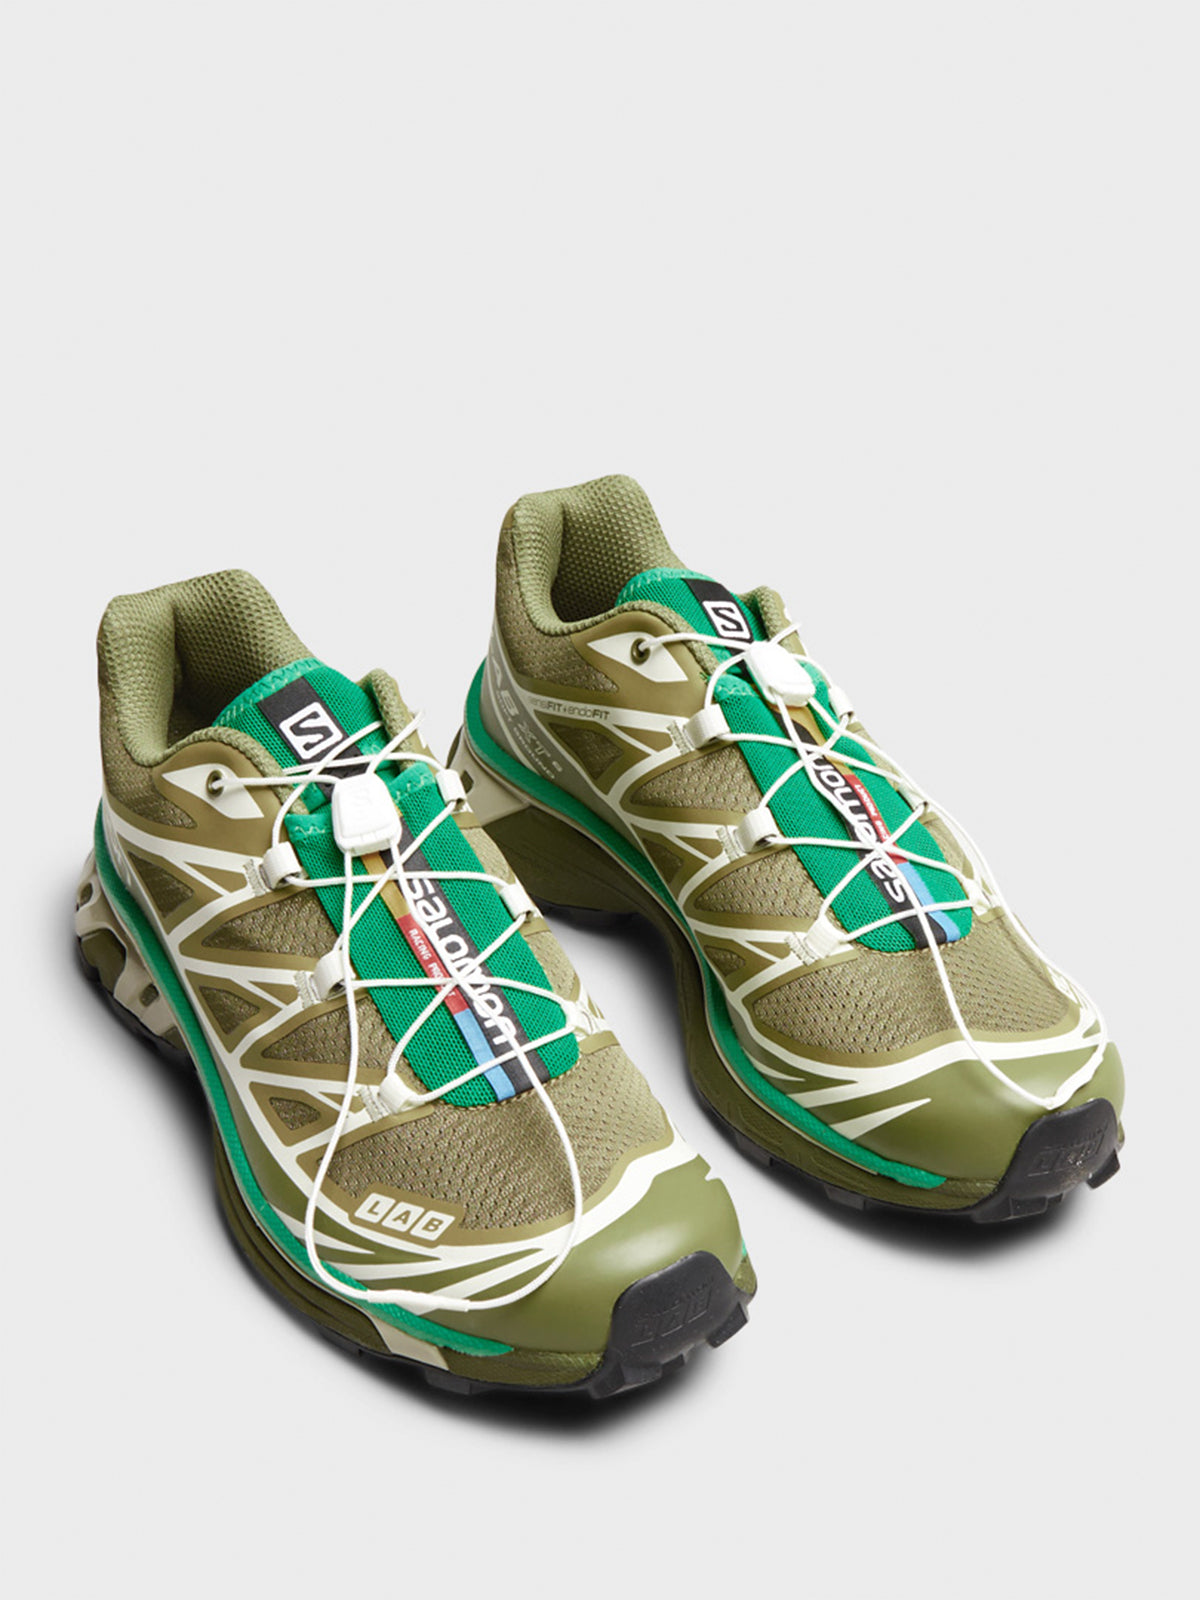 XT-6 Sneakers i Dried Herb, Deep Lichen Green og Bright Green